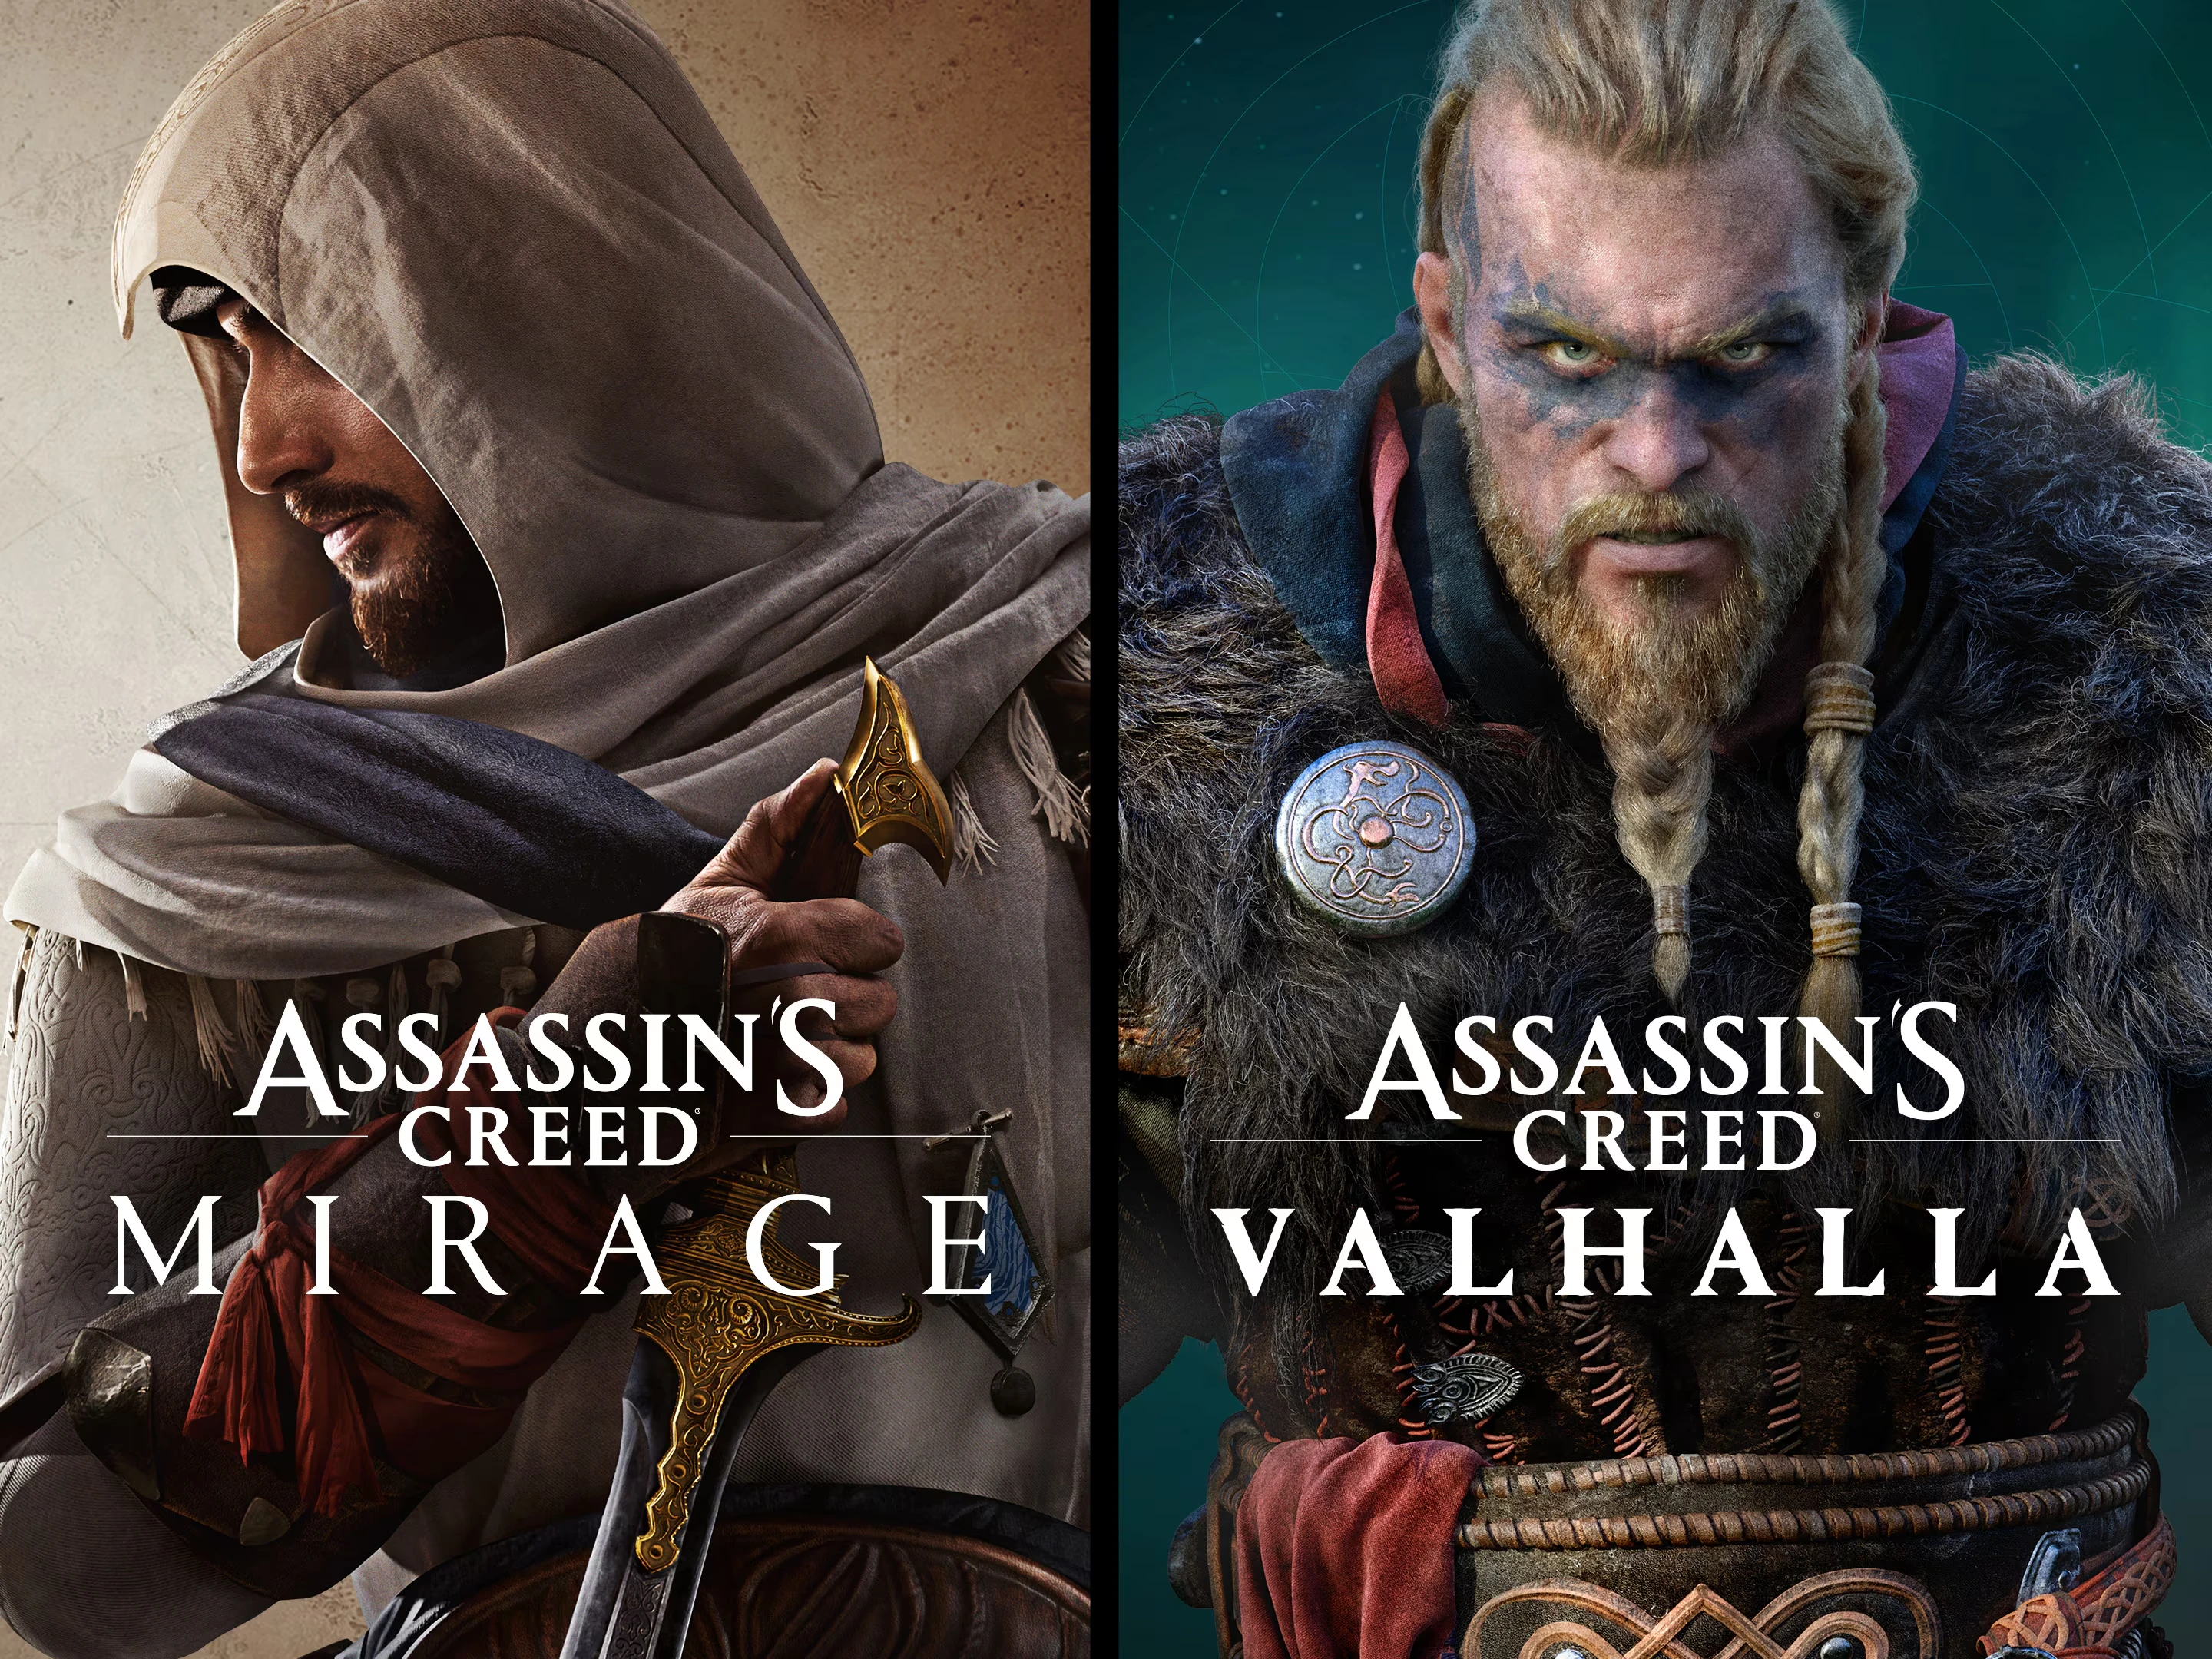 Assassin's Creed Mirage + Assassin's Creed Valhalla